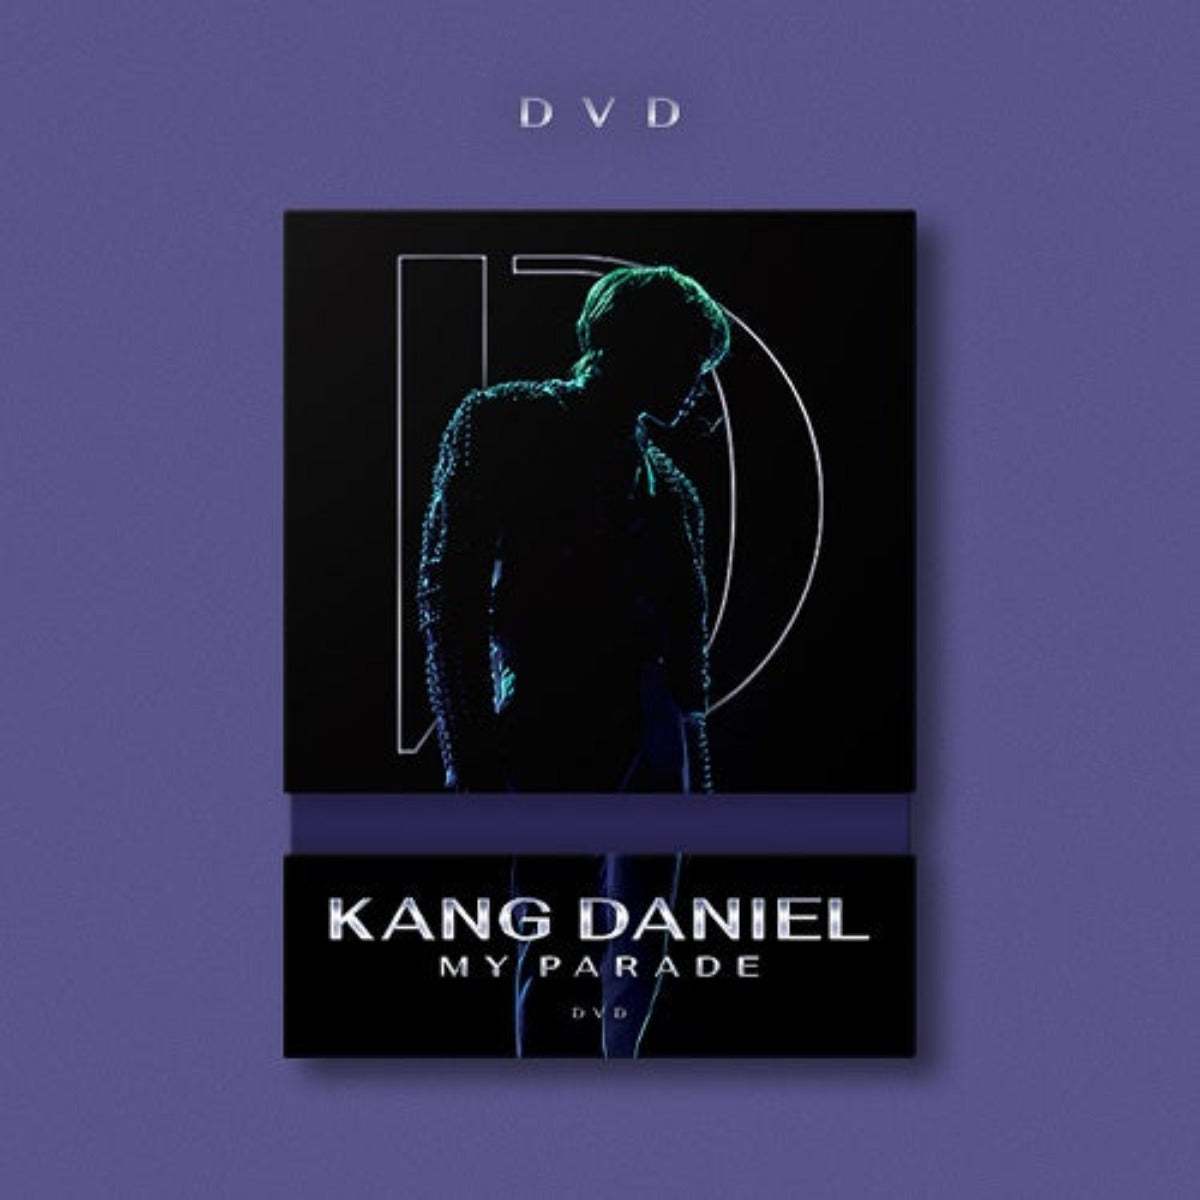 Kang Daniel - Kang Daniel My Parade (DVD) DVD Region All